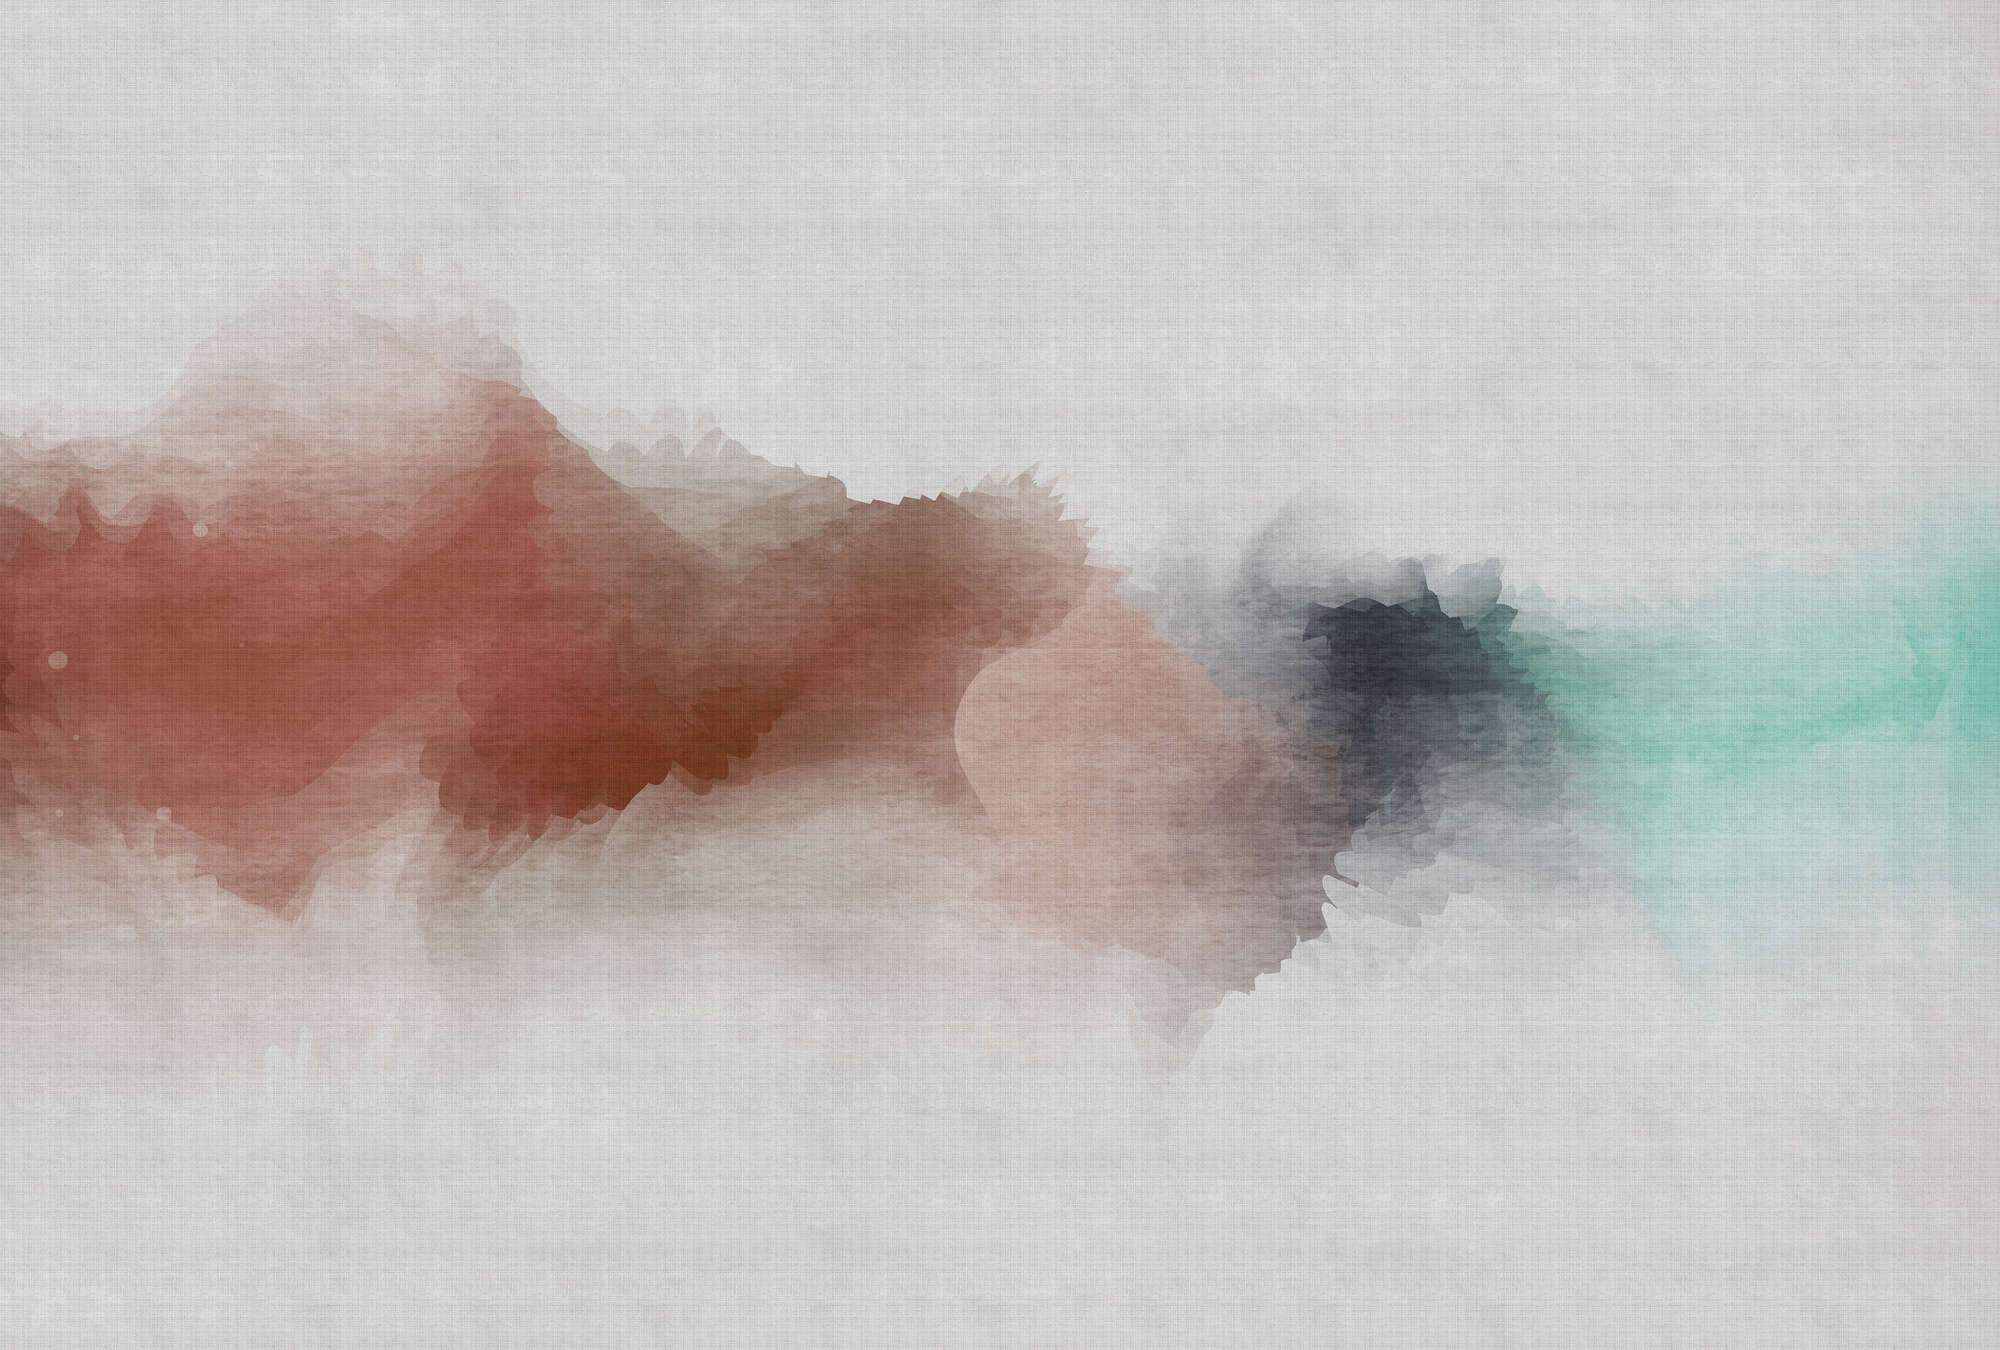             Daydream 2 - Fototapete in naturleinen Struktur mit Farbfleck im Aquarell Stil – Grau, Rot | Mattes Glattvlies
        